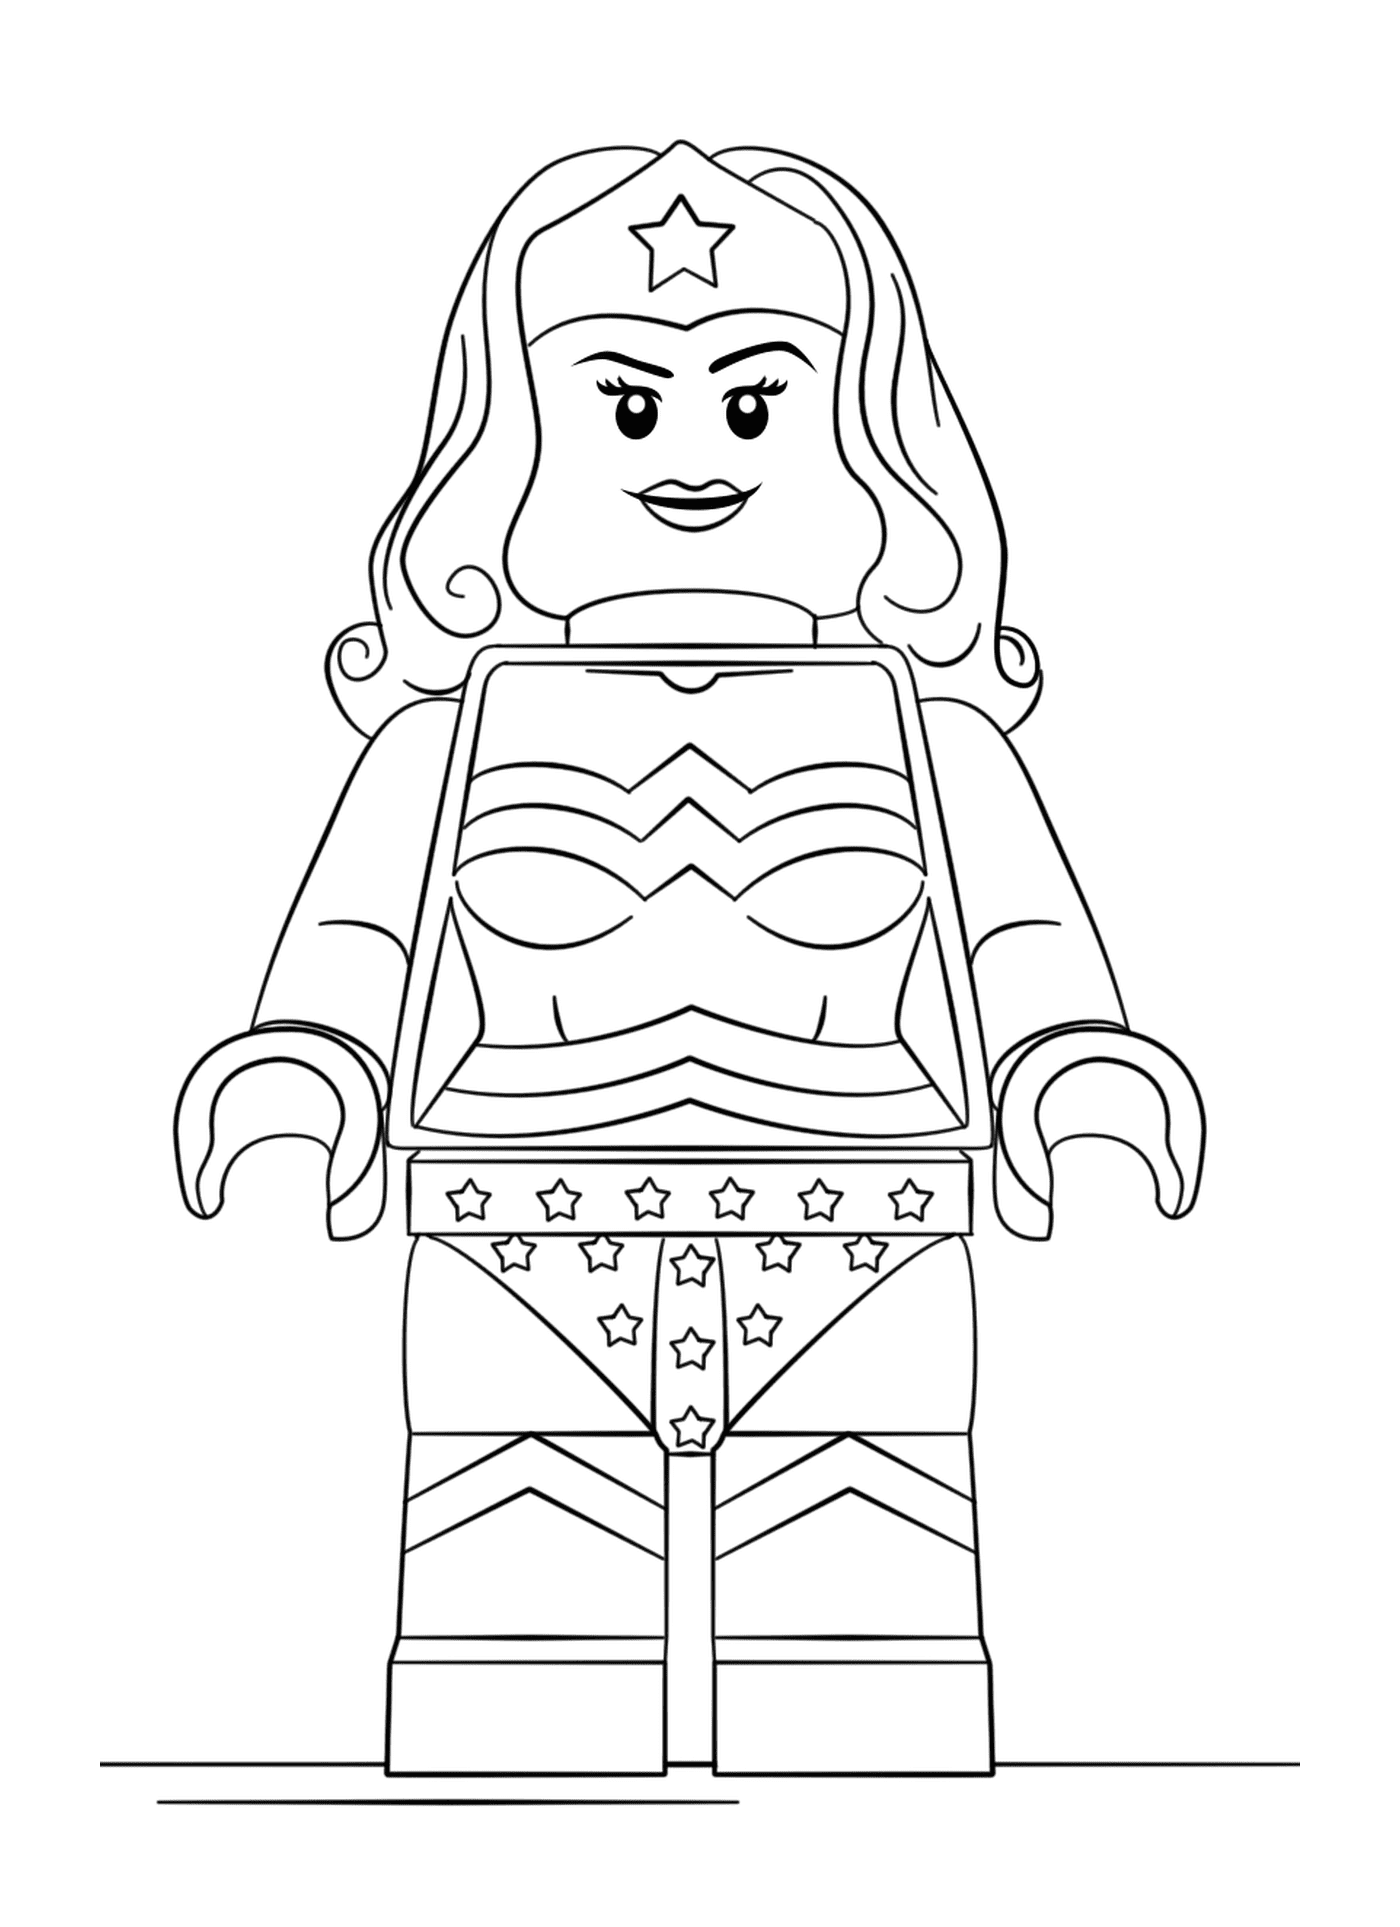  Mulher Maravilha em Lego 